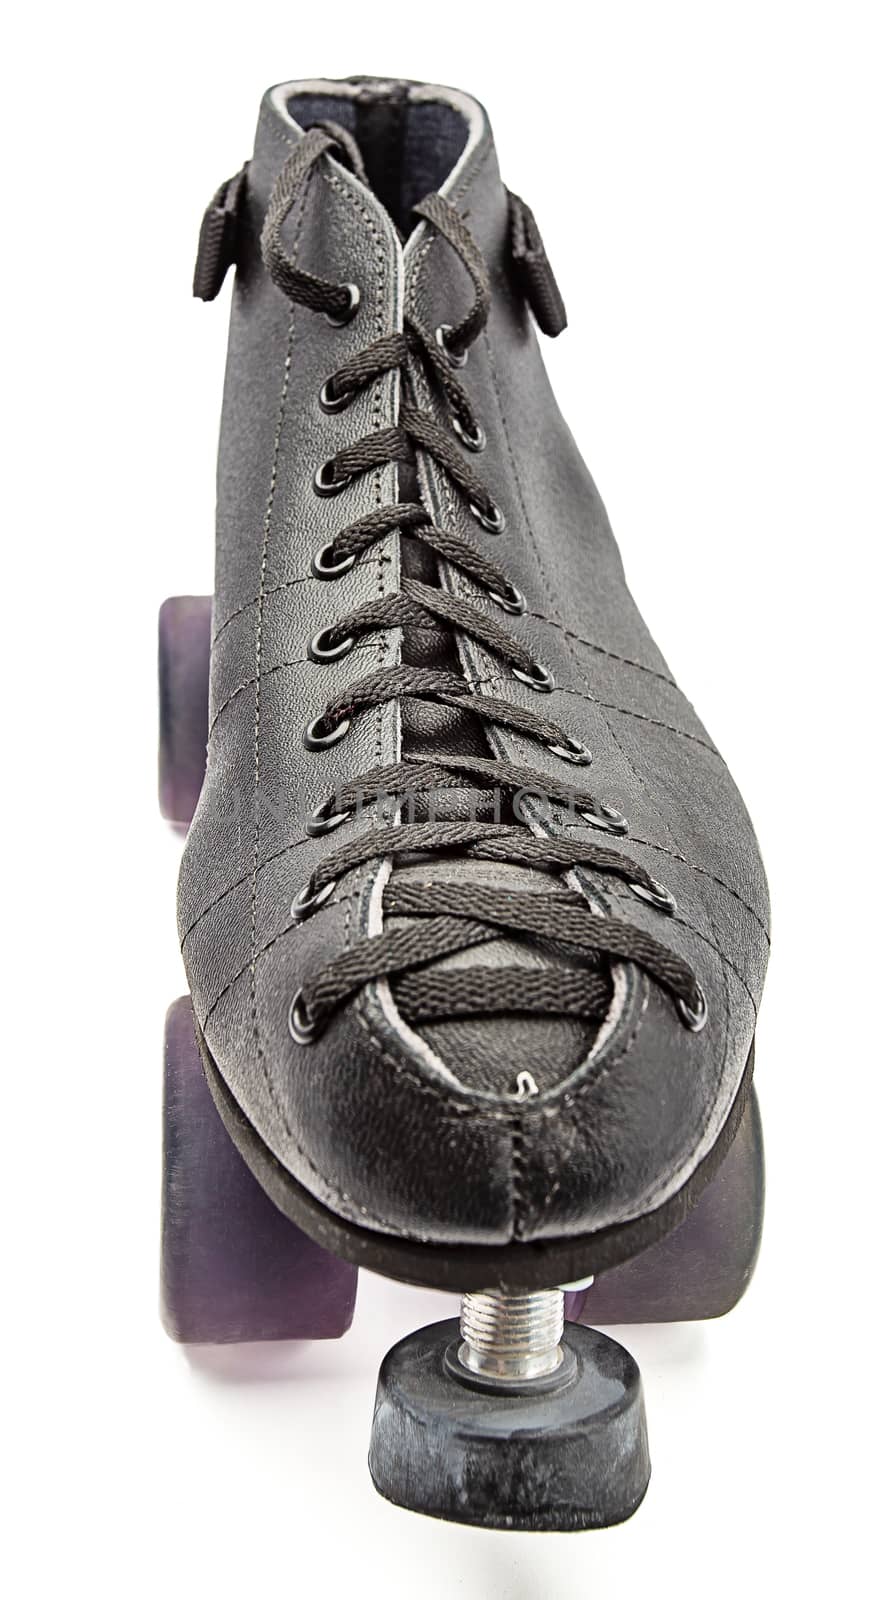 Black boot roller skate with purple wheels